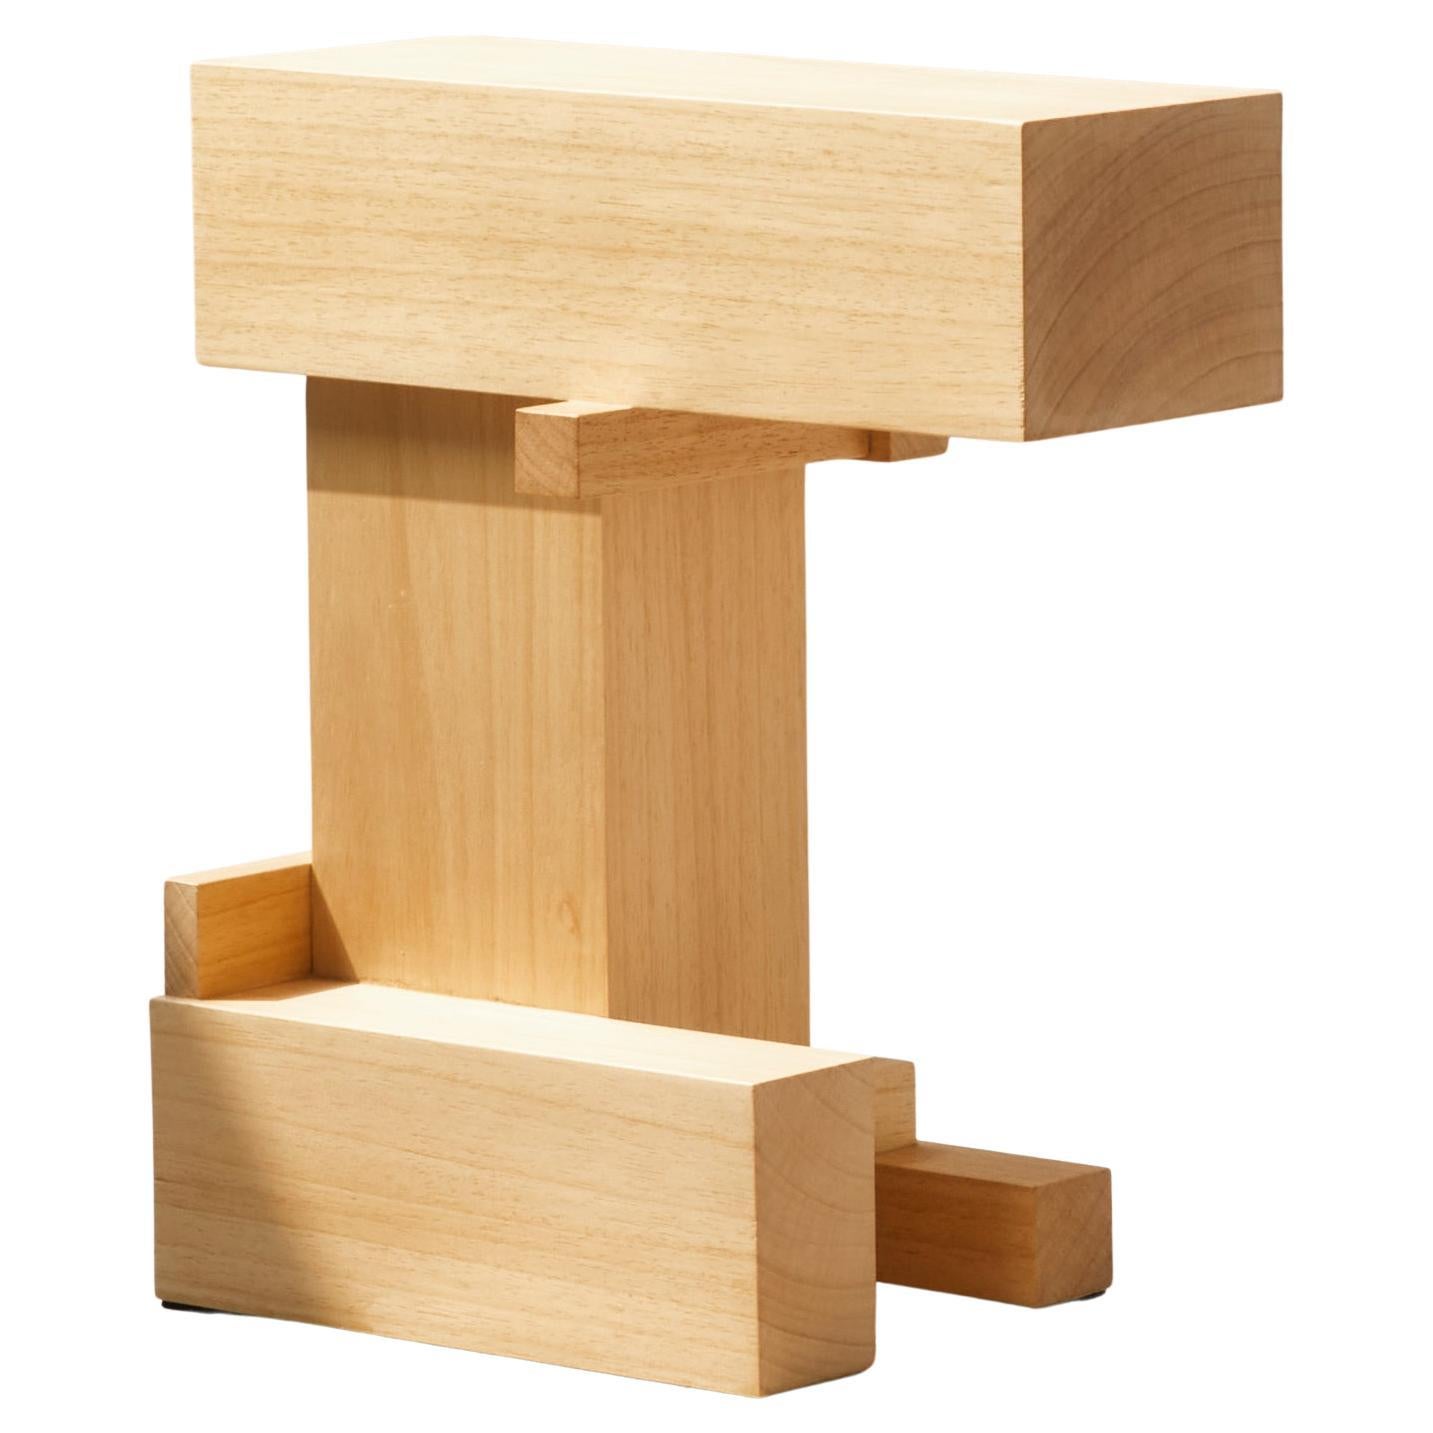 Table d'appoint minimaliste japonaise en Wood Wood Splint #1 par Sho Ota en vente